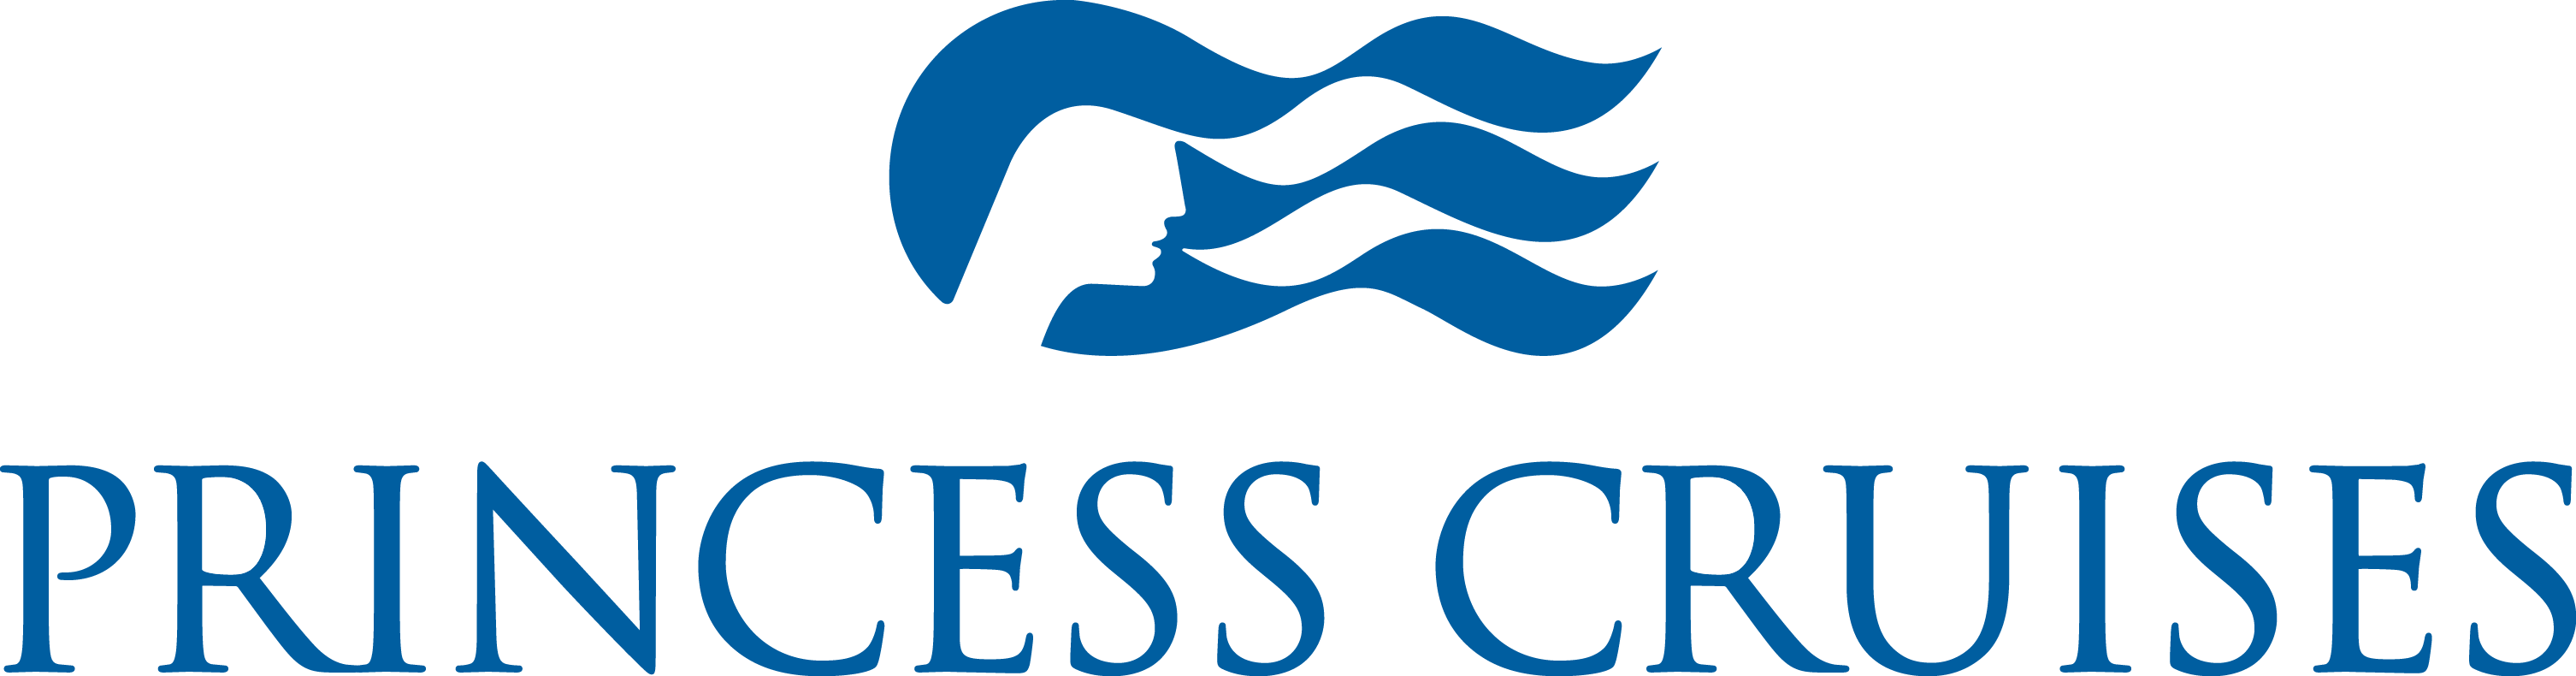 Princess Cruises Logo png